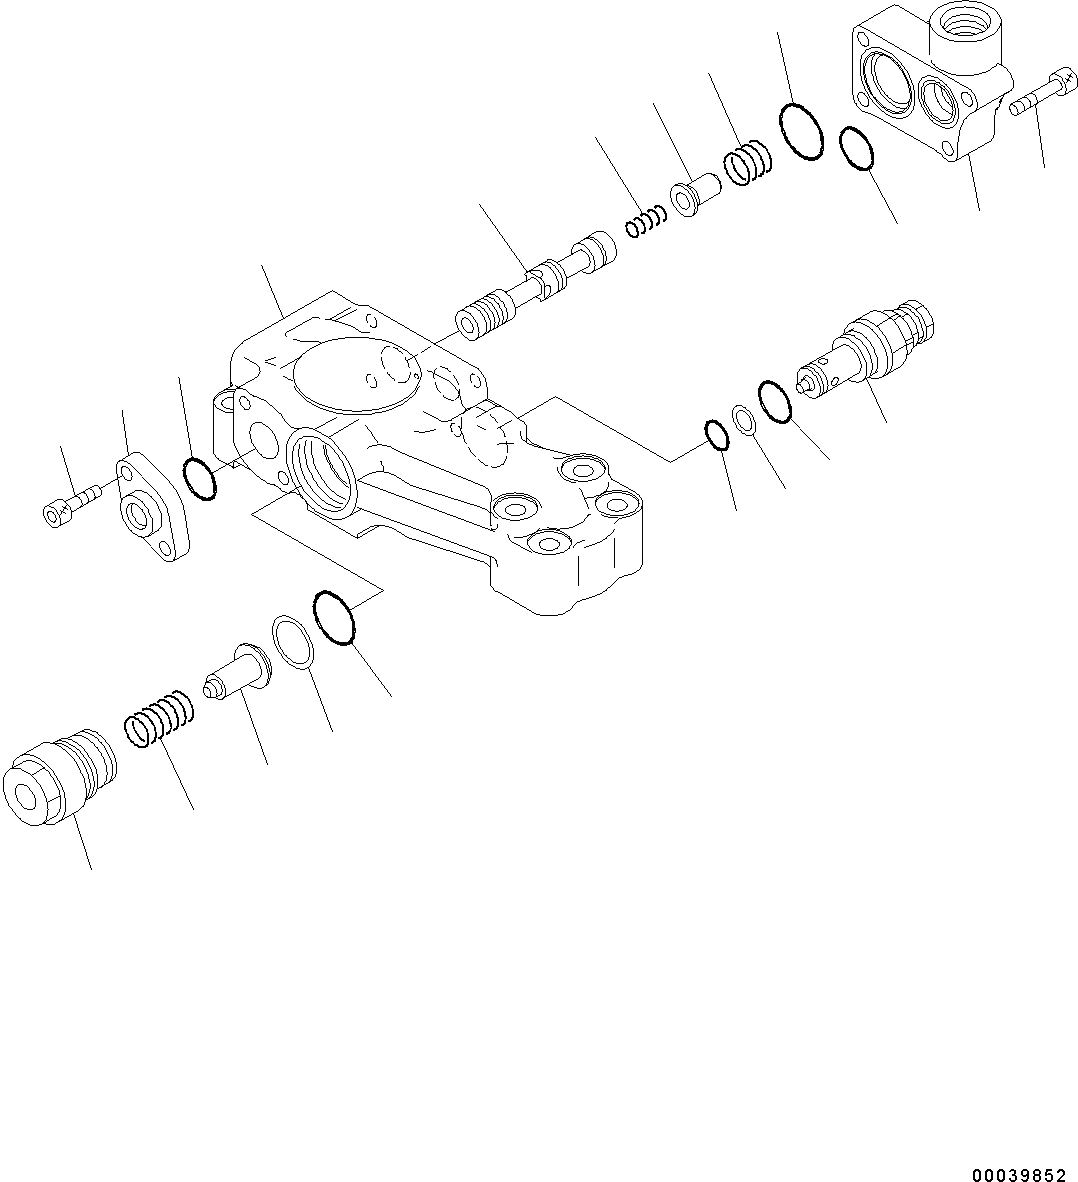 Схема запчастей Komatsu PC360LC-10 - ANTI-DROP КЛАПАН, СТРЕЛА И РУКОЯТЬ, СТРЕЛА ANTI-DROP КЛАПАН (/) ANTI-DROP КЛАПАН, СТРЕЛА И РУКОЯТЬ